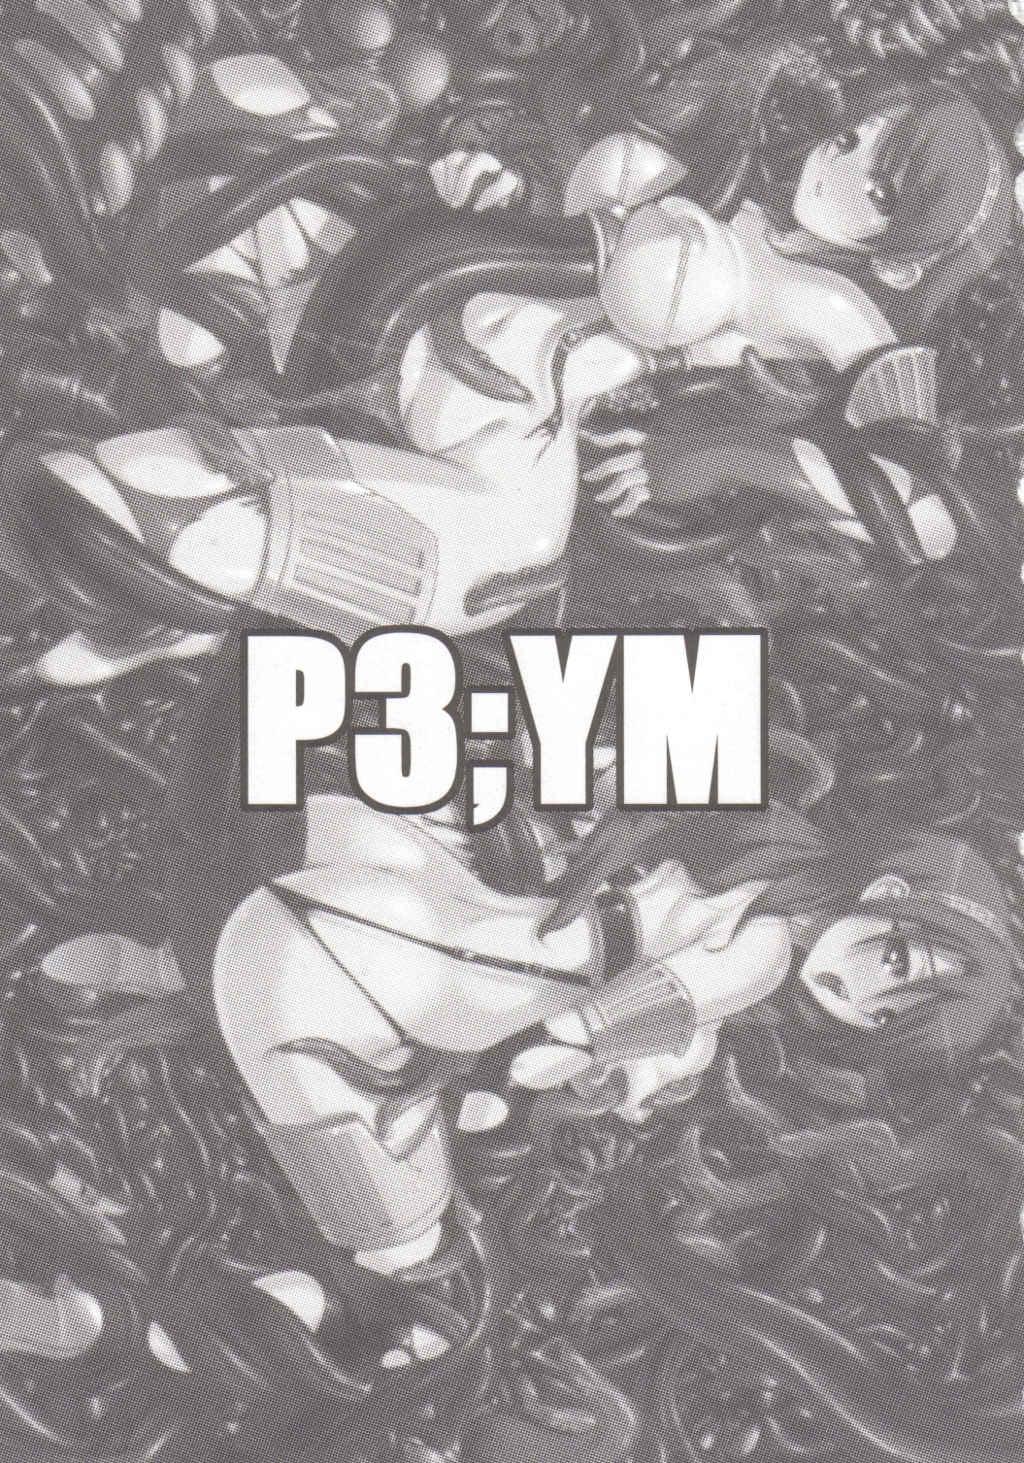 P3;YM 2